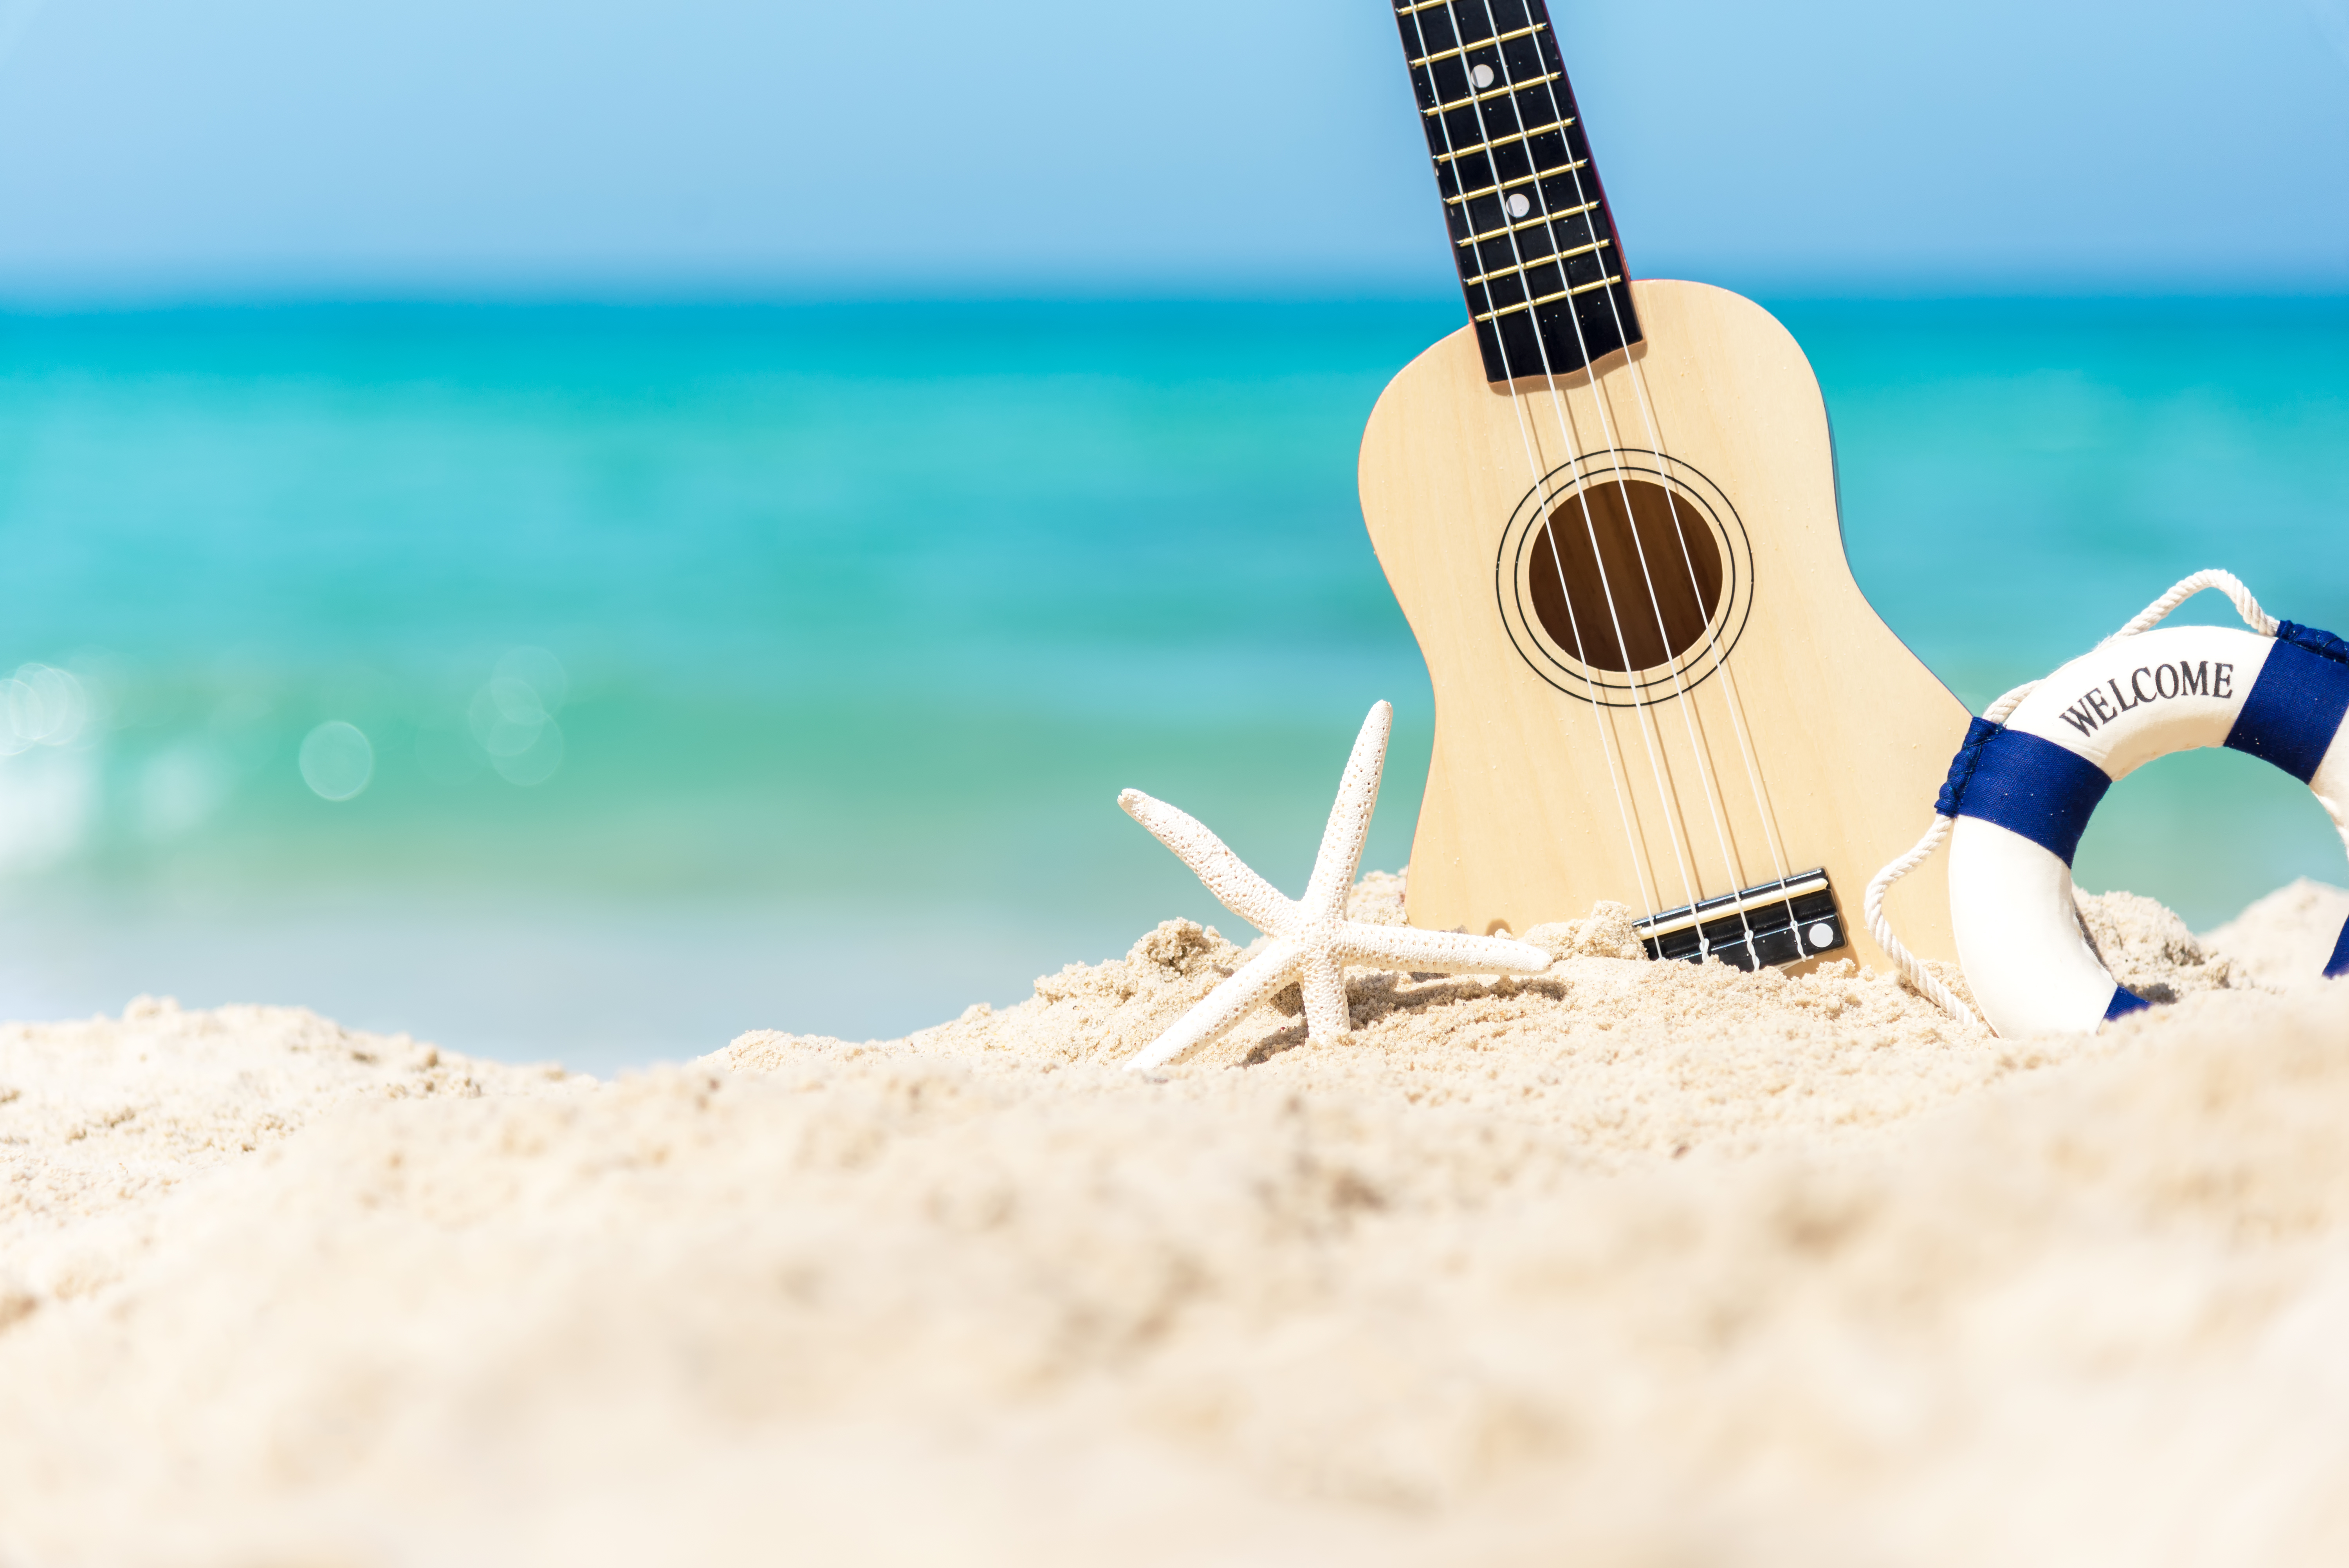 guitar, buoy and shell on sandy beach